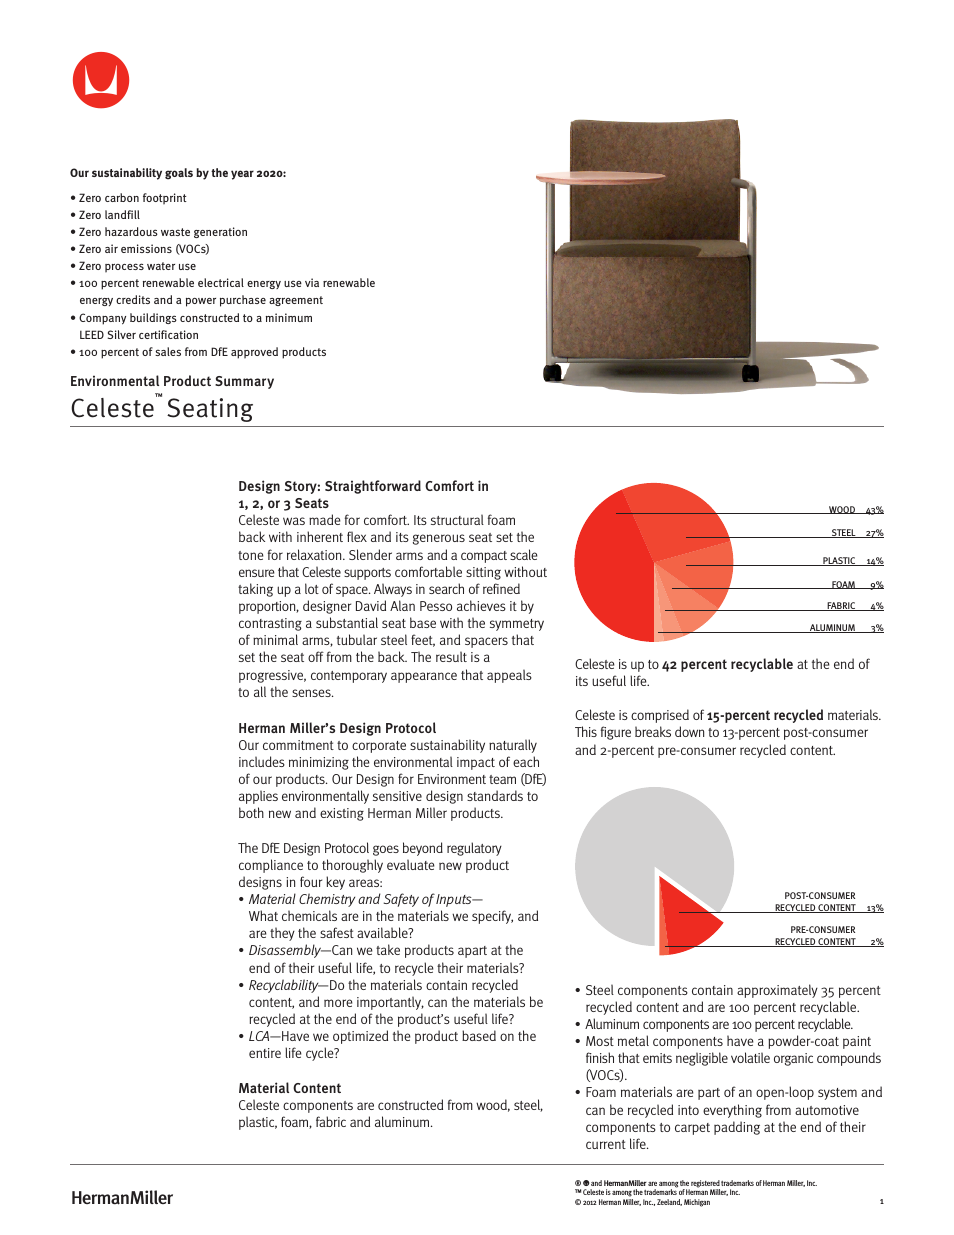 Celeste Seating - Environmental Product Summary